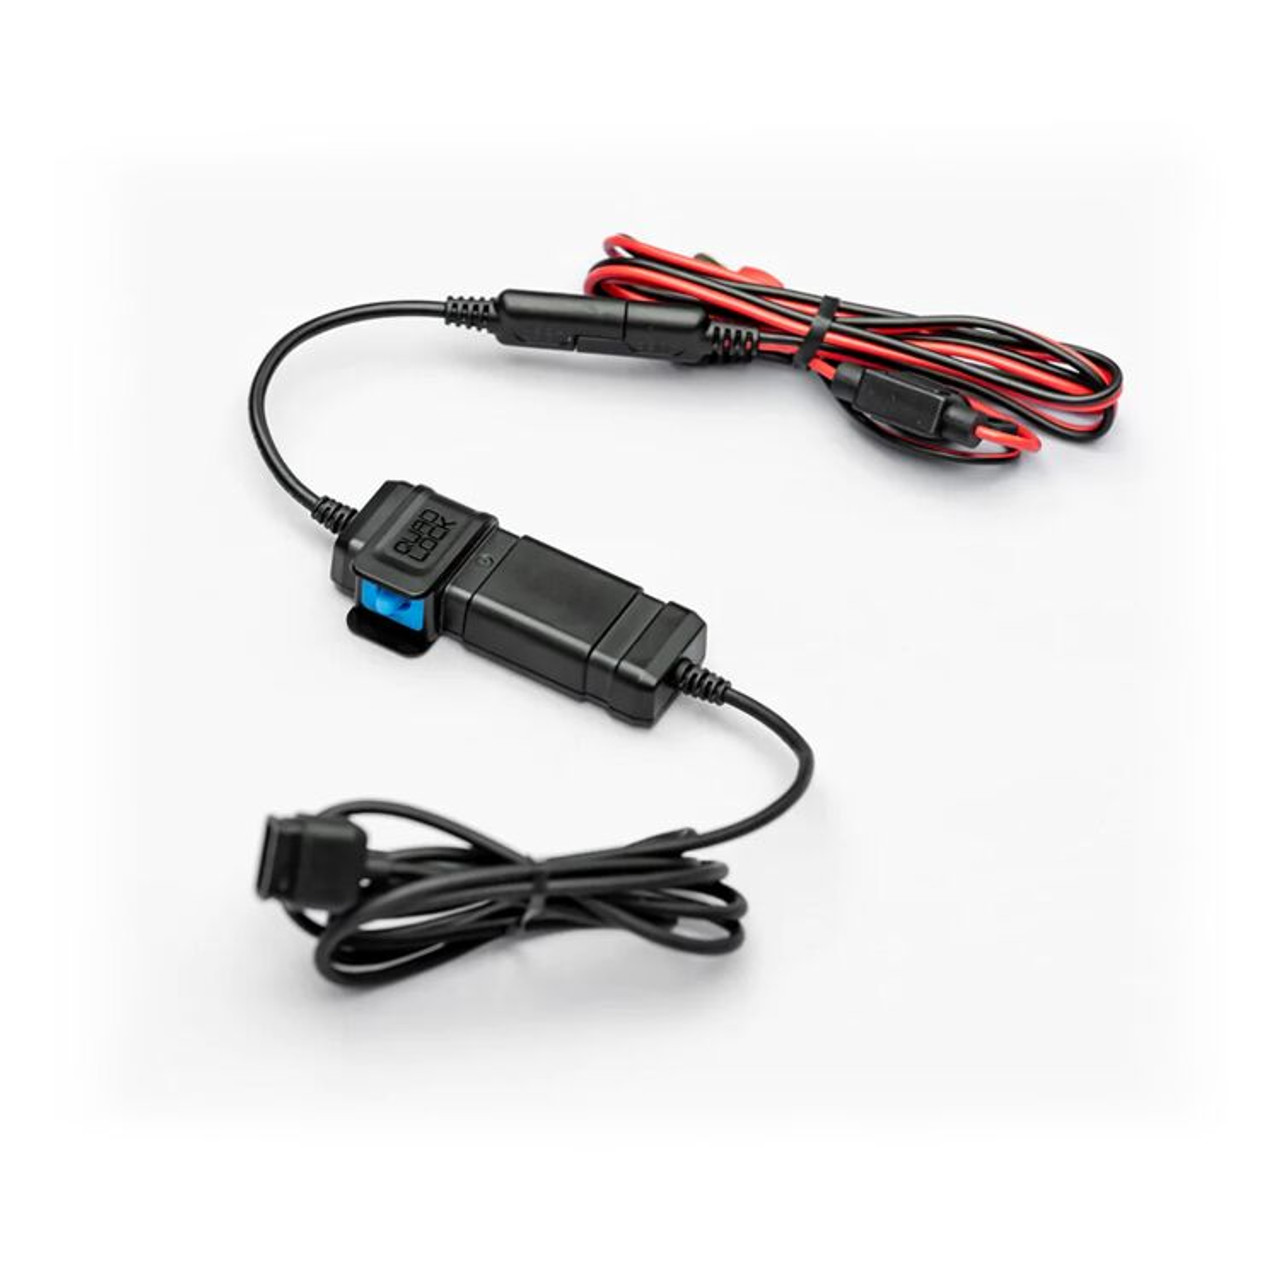  Quad Lock Motorcycle USB Charger : Automotive